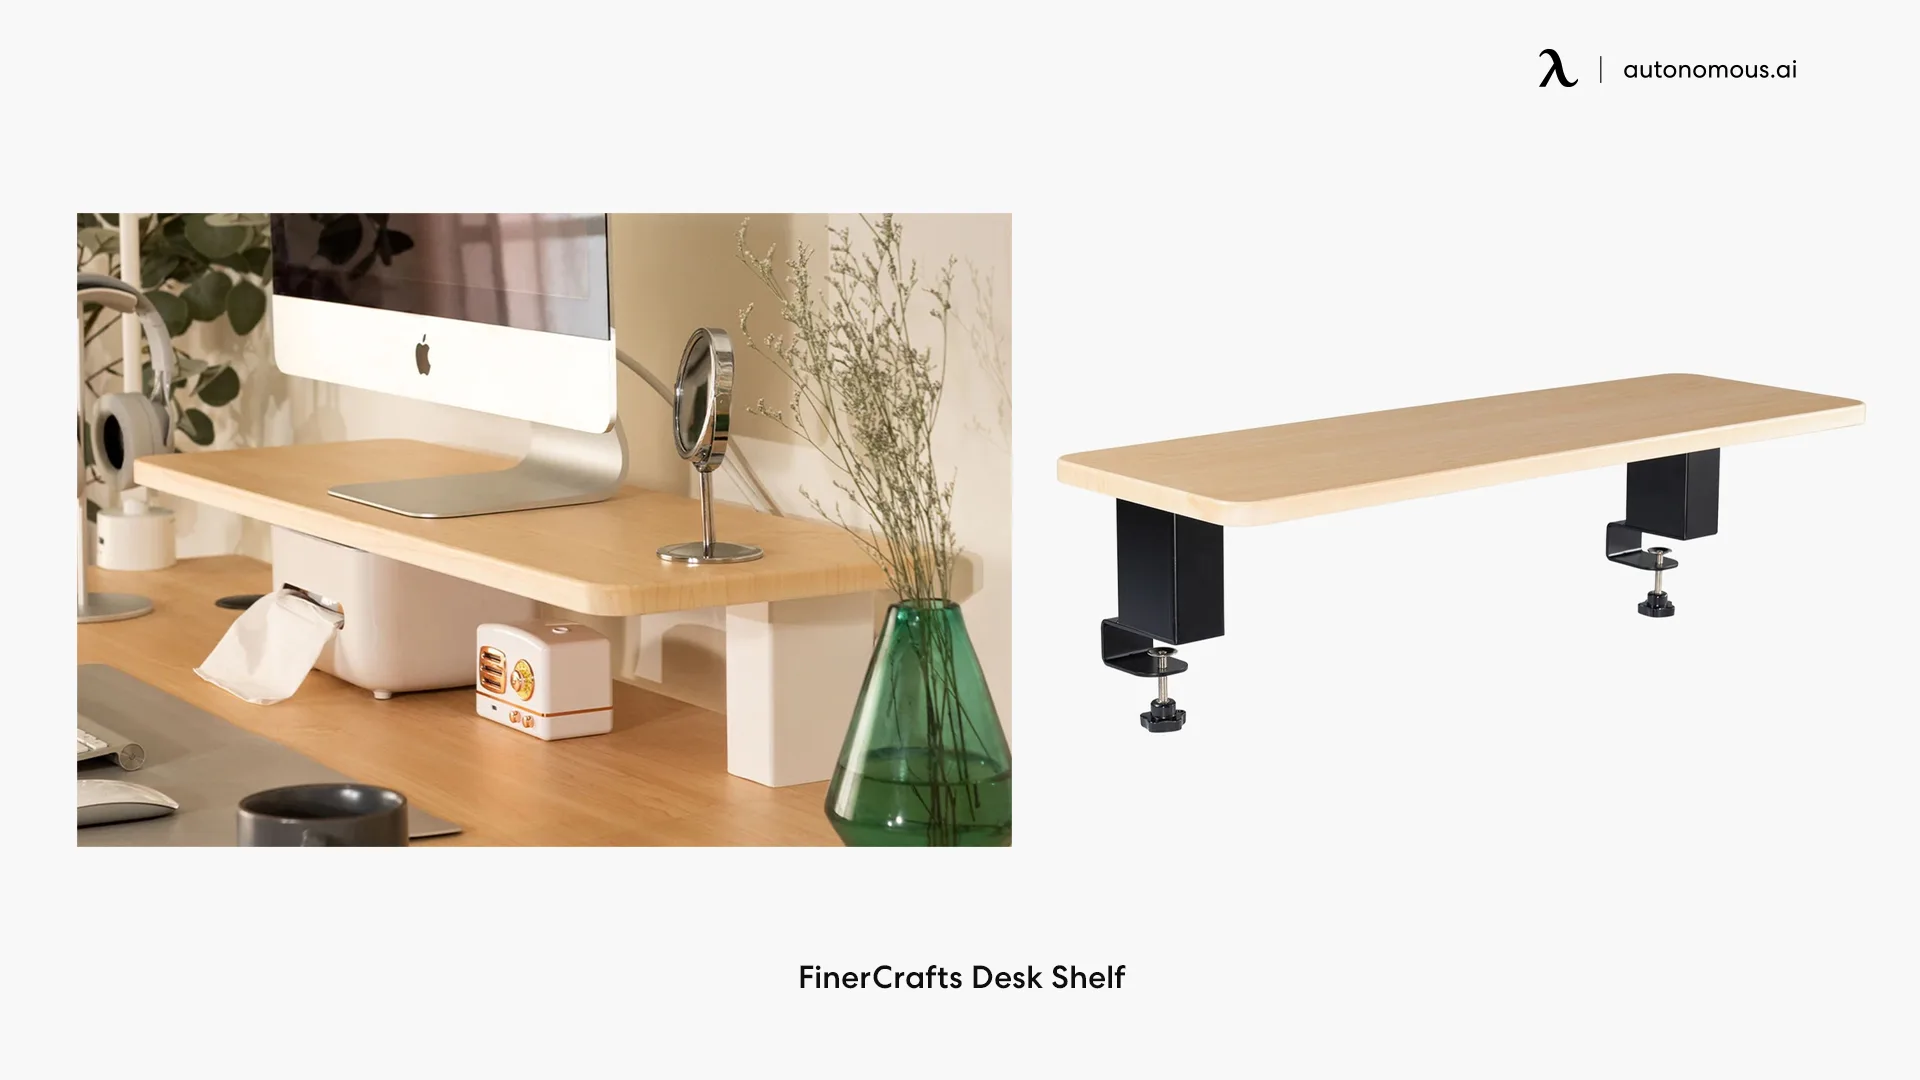 FinerCrafts Desk Shelf office desk with monitor stand